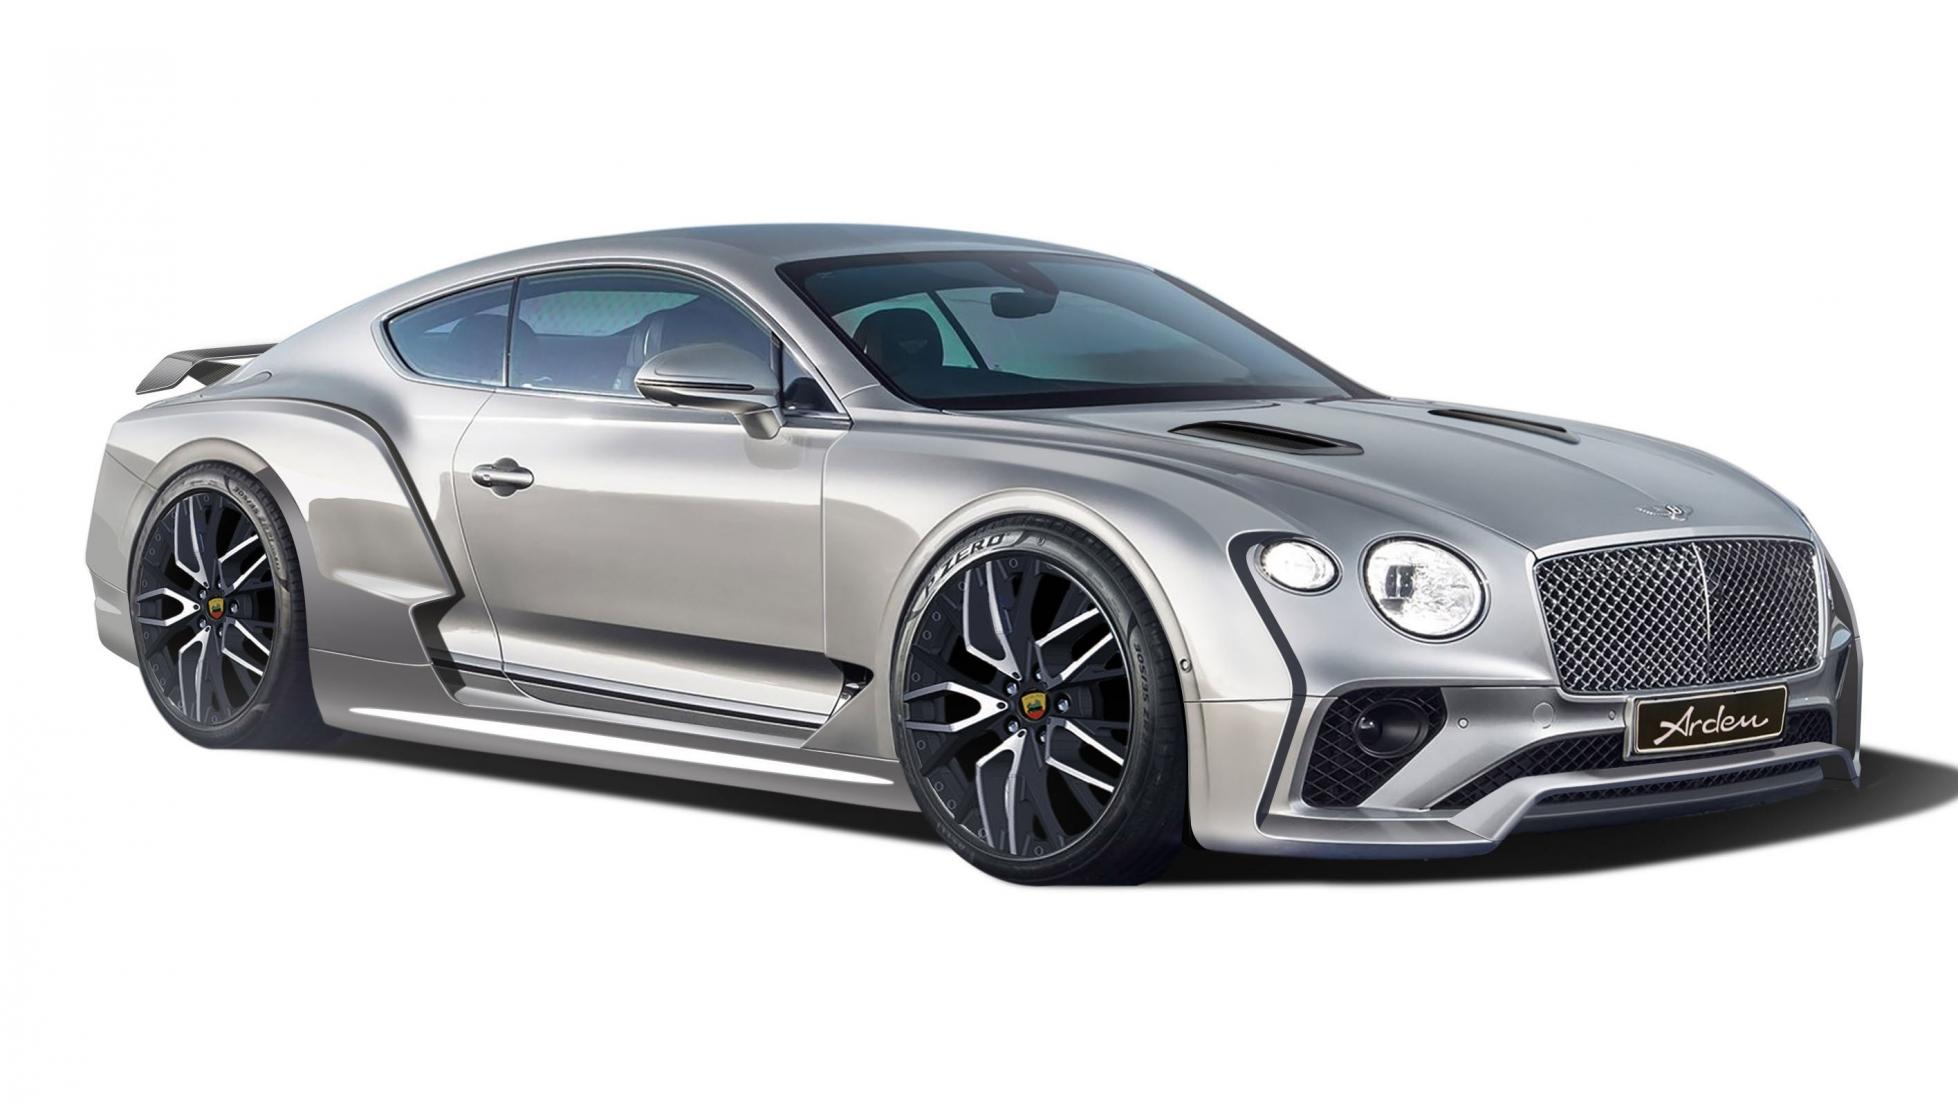 Tuner attacks Bentley Continental GT with carbonfibre